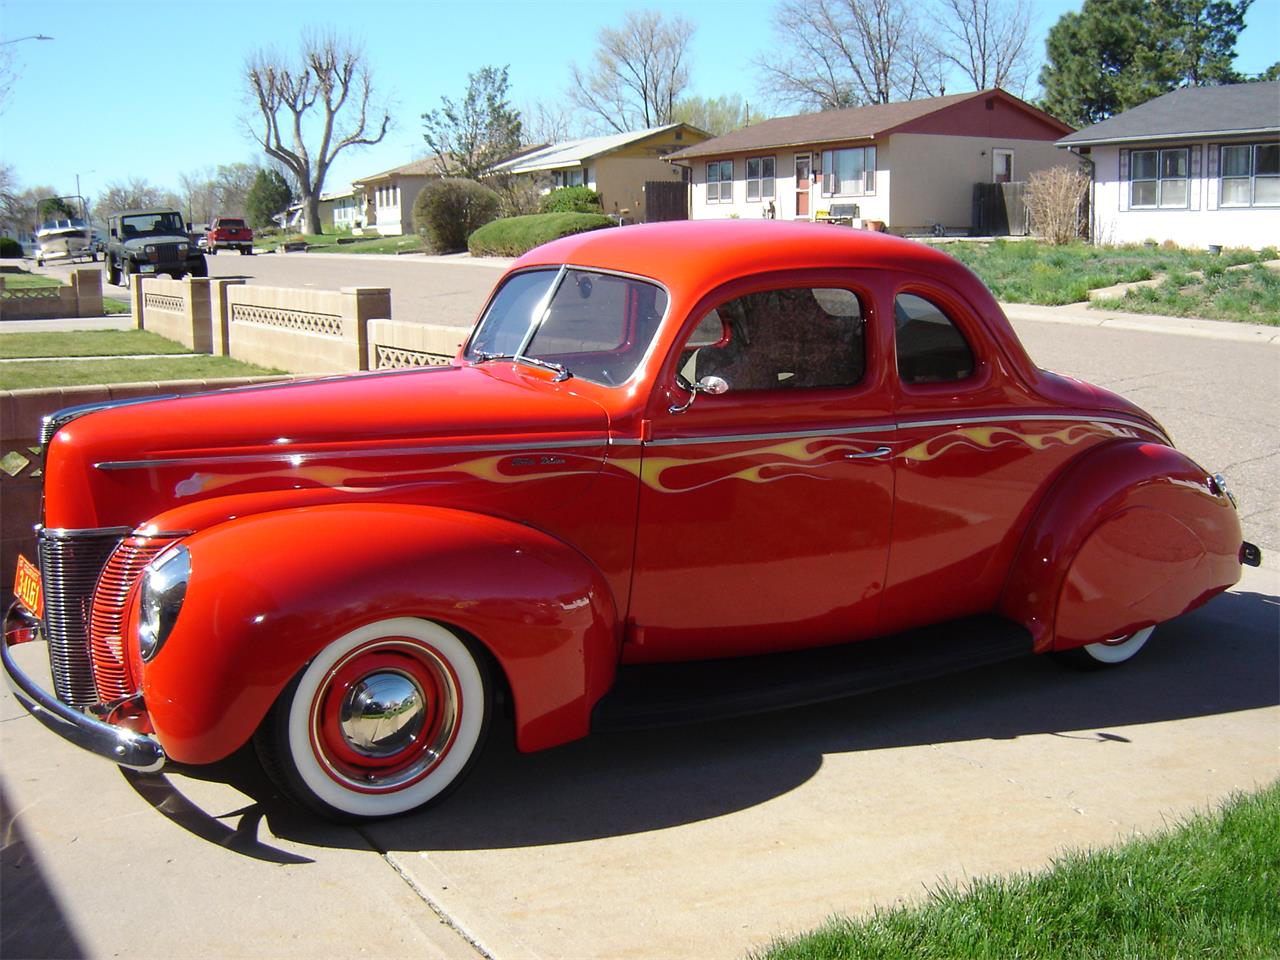 For Sale: 1940 Ford Coupe in Pueblo West, Colorado.